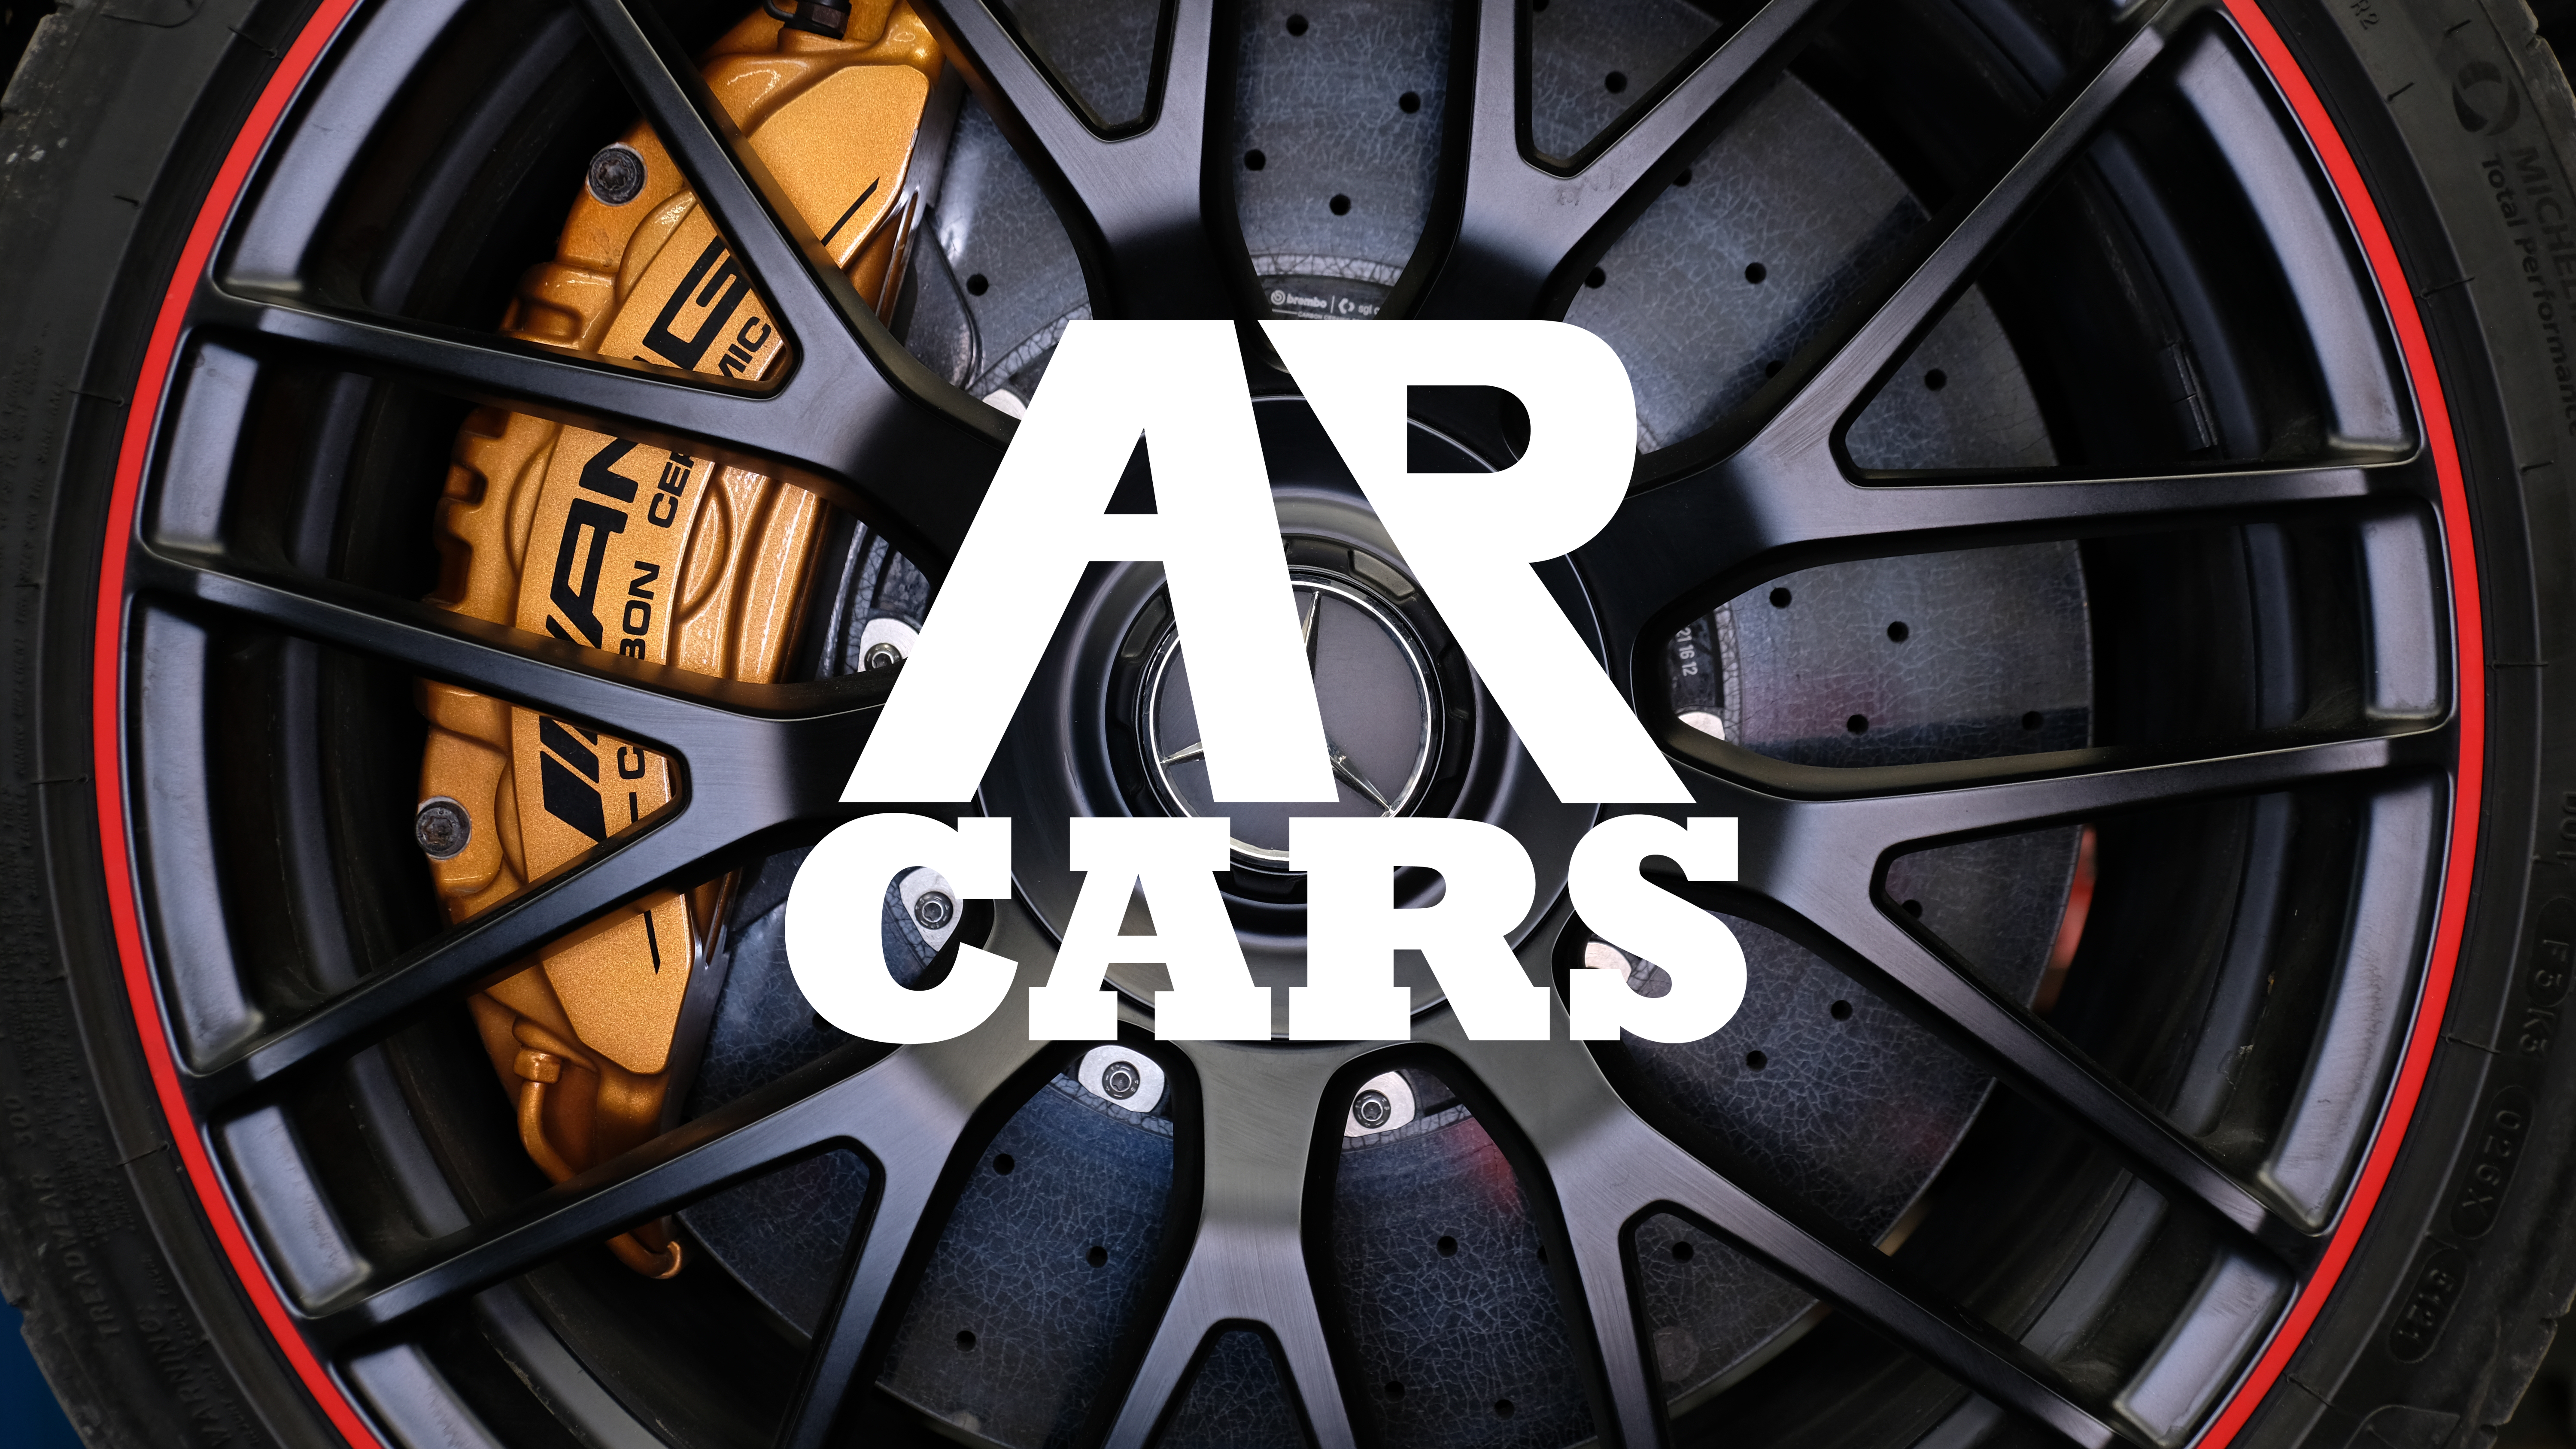 Ar Cars logo in wheel